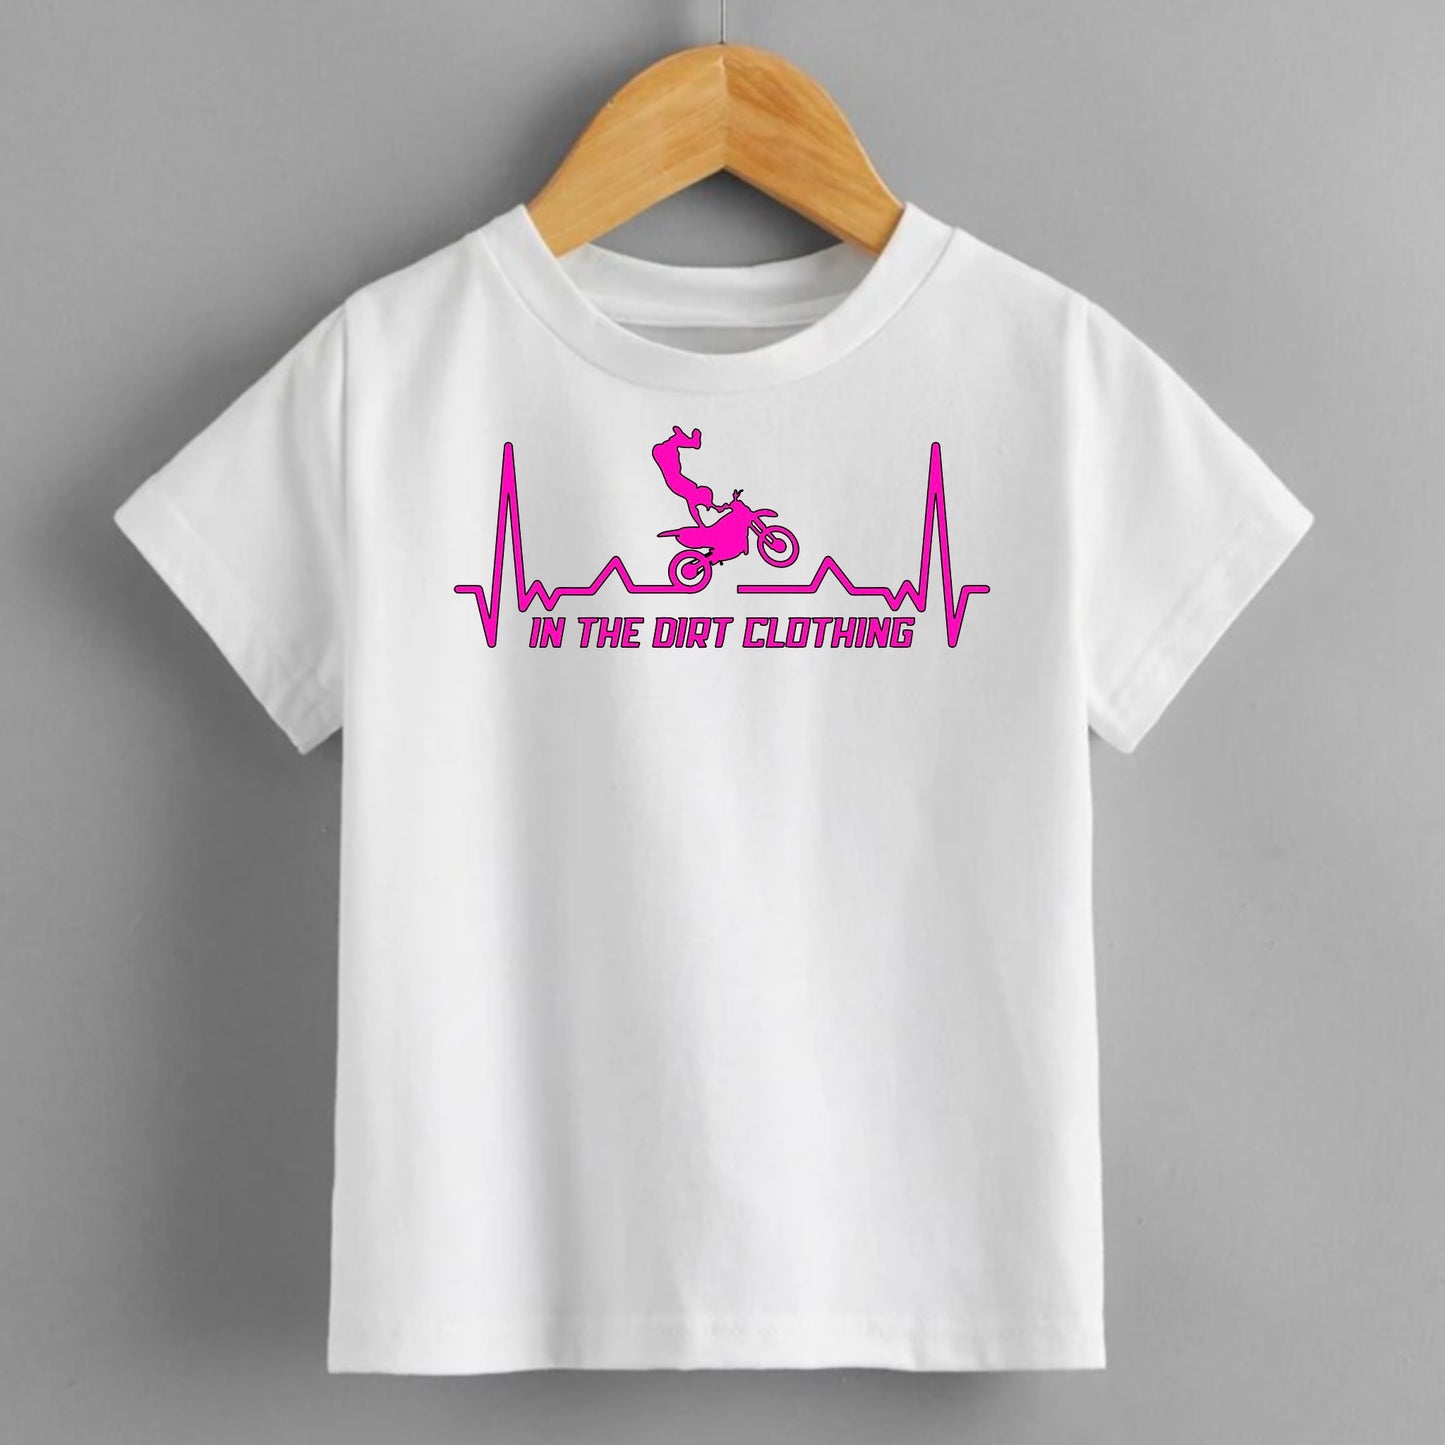 Heartbeat girls bike tee